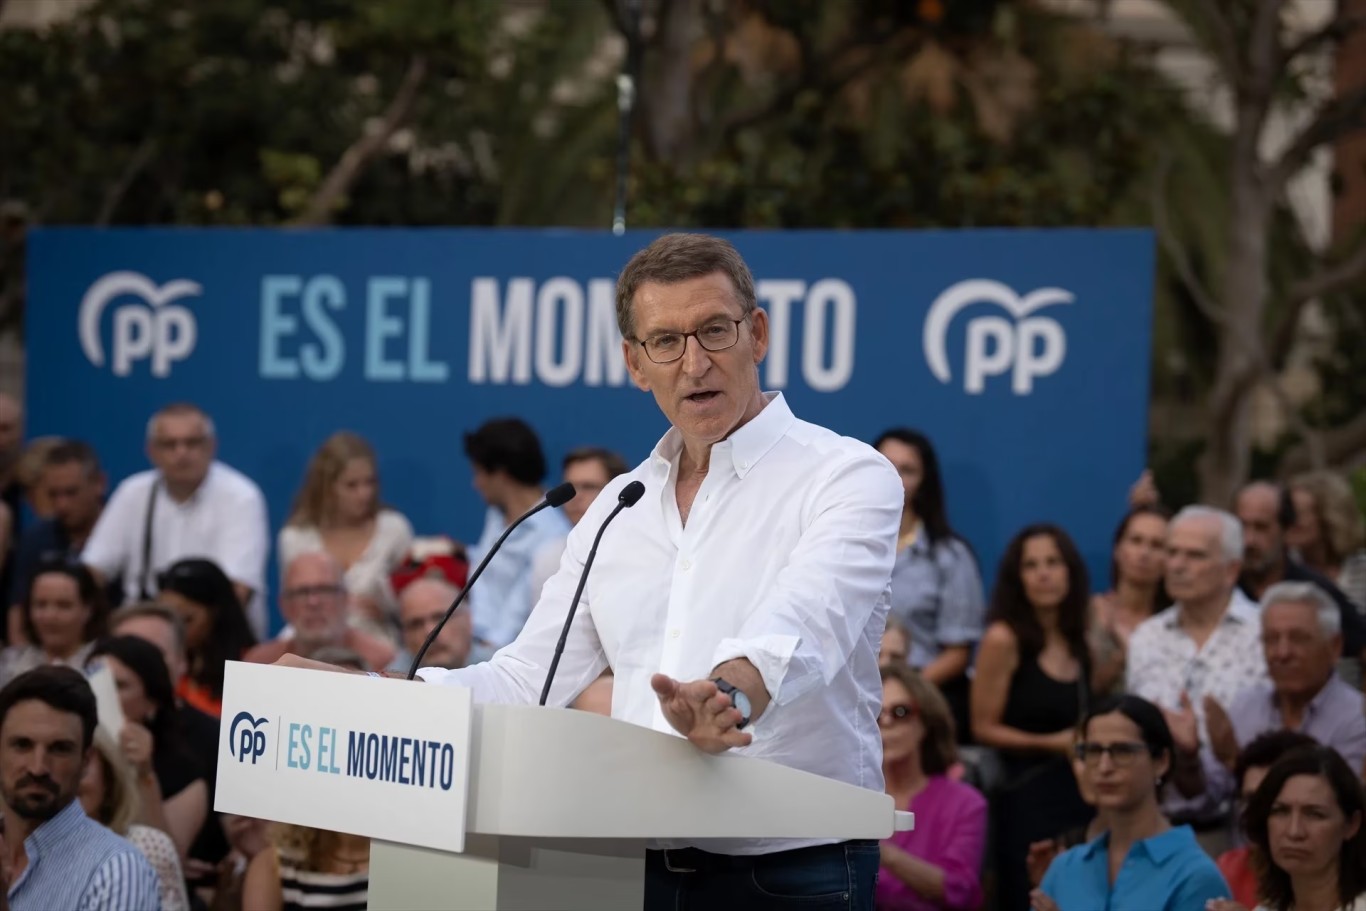 Roberto Castiñeira: "Al Partido Popular no le alcanza para elegir Primer Ministro"